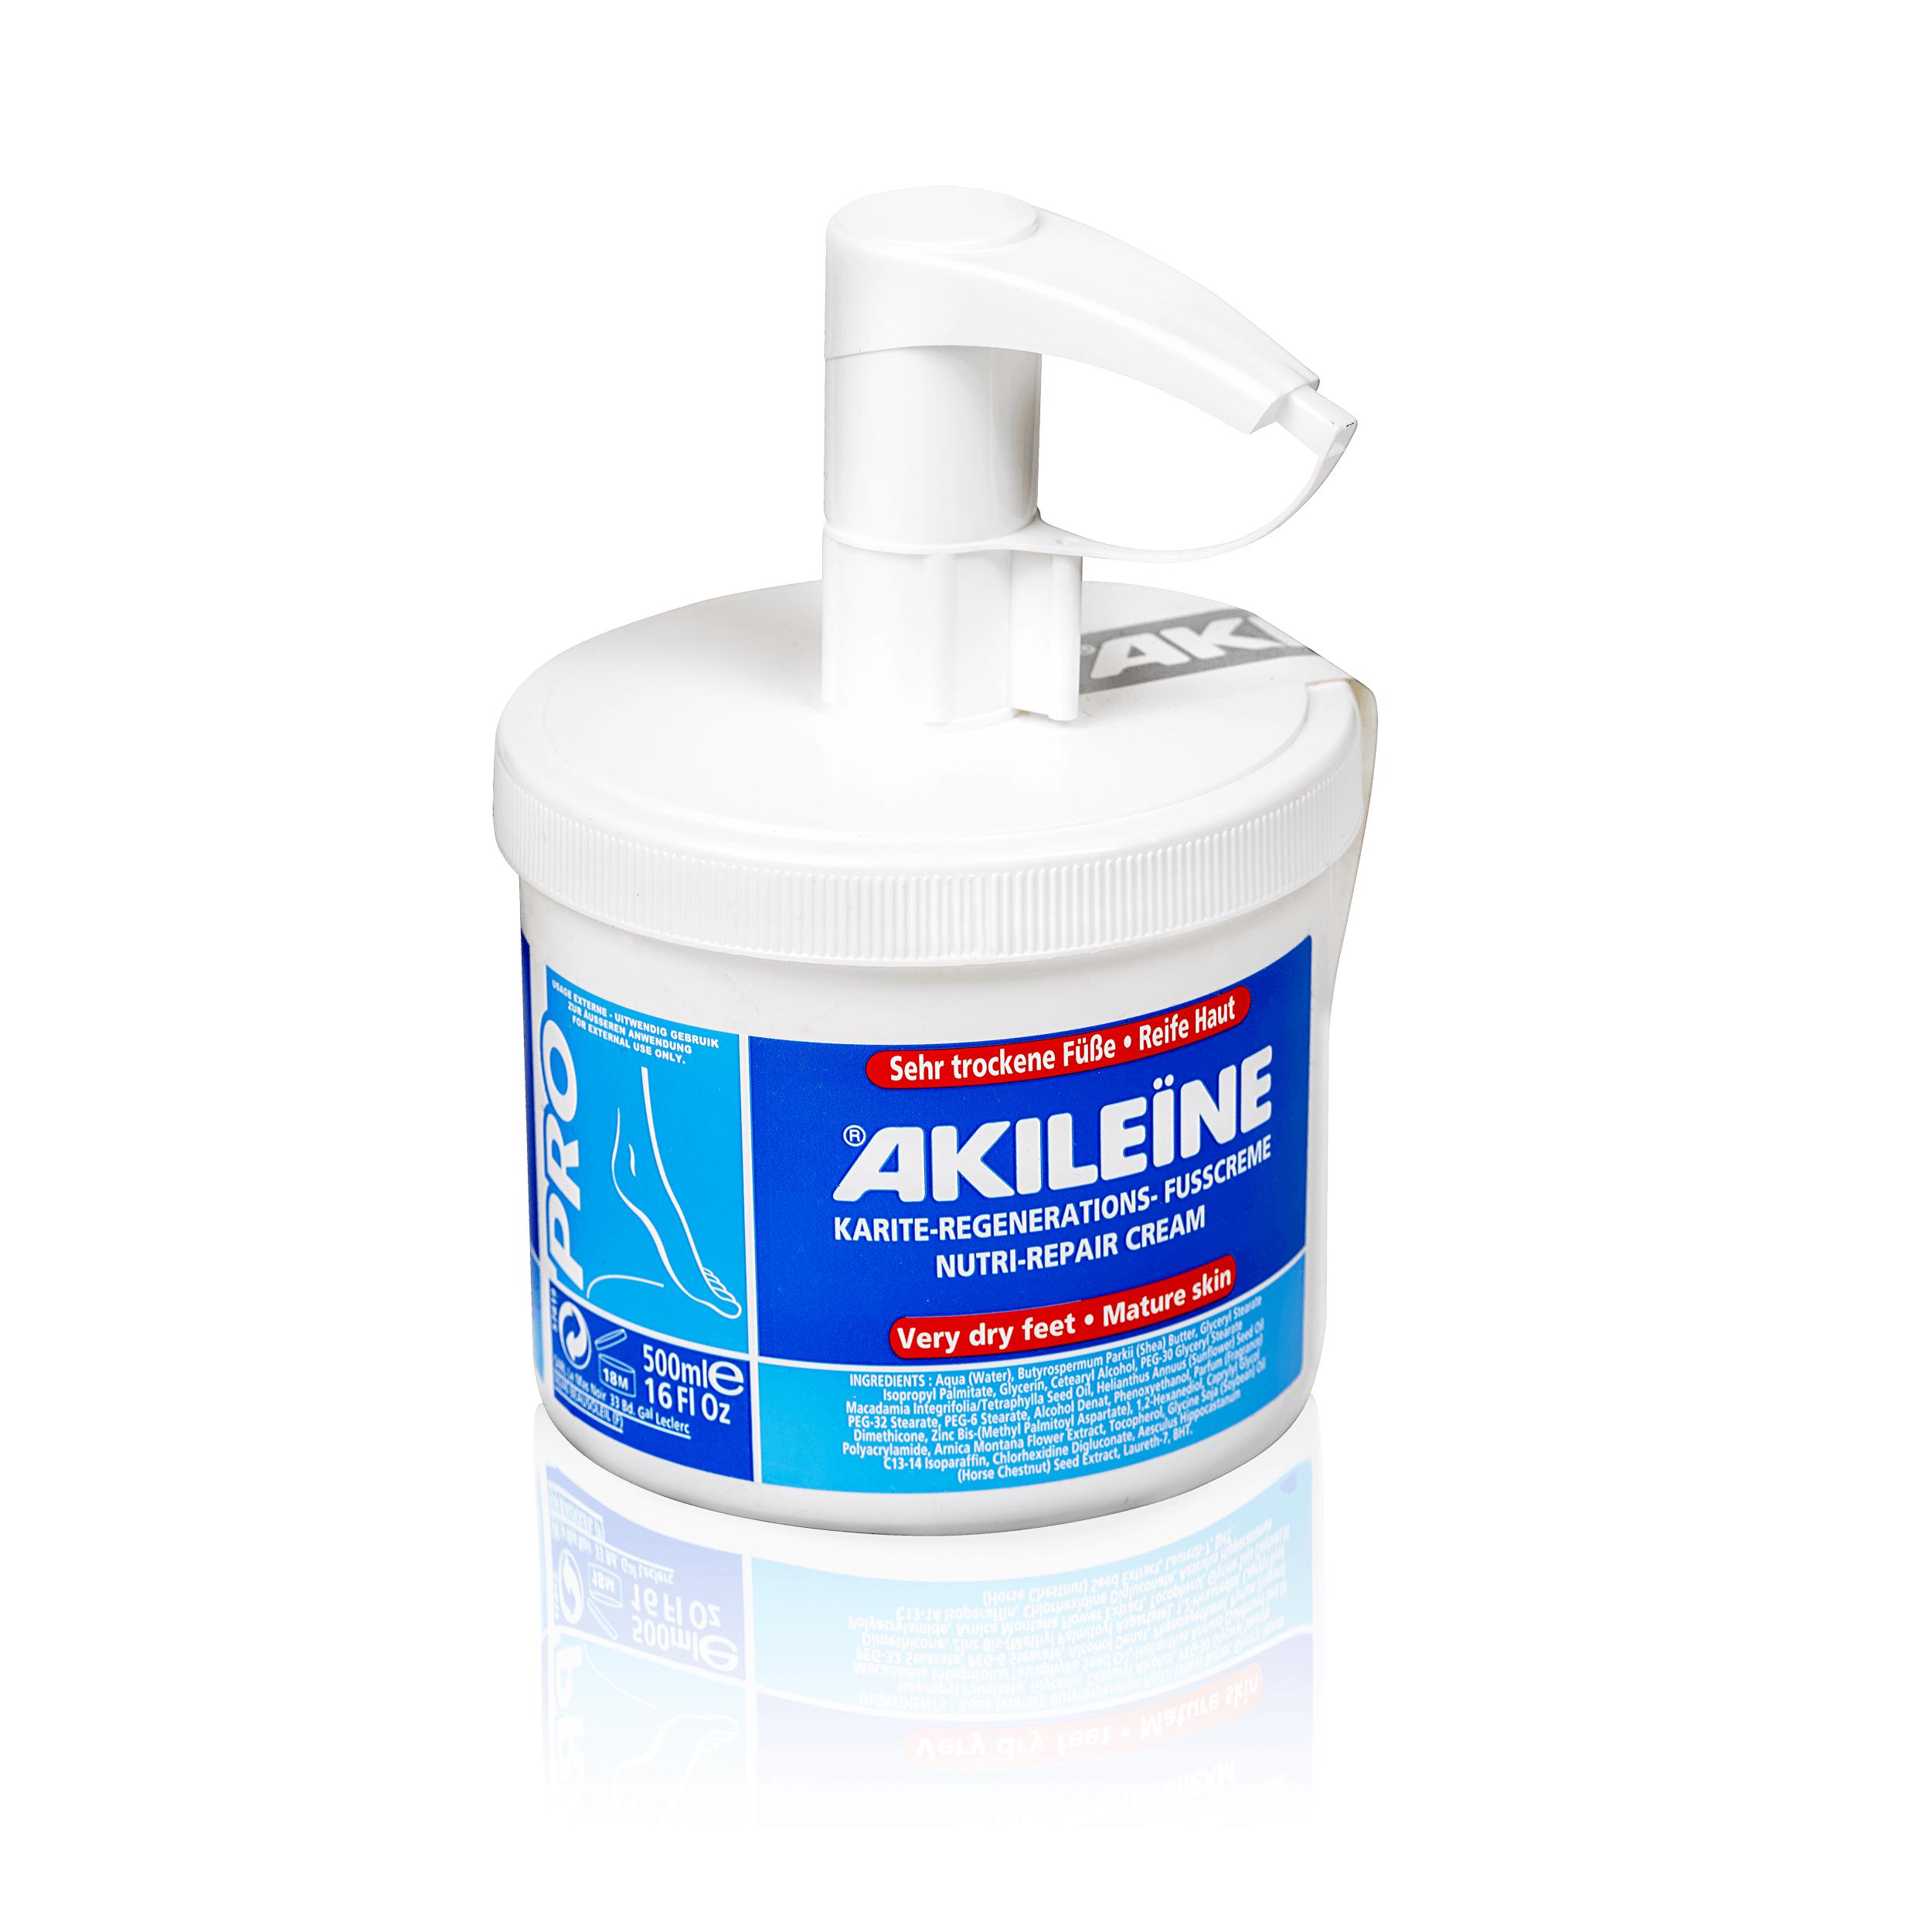 AKILEINE - Nutri-Repair Karité-Regenerations-Fusscreme, 500ml Spenderflasche